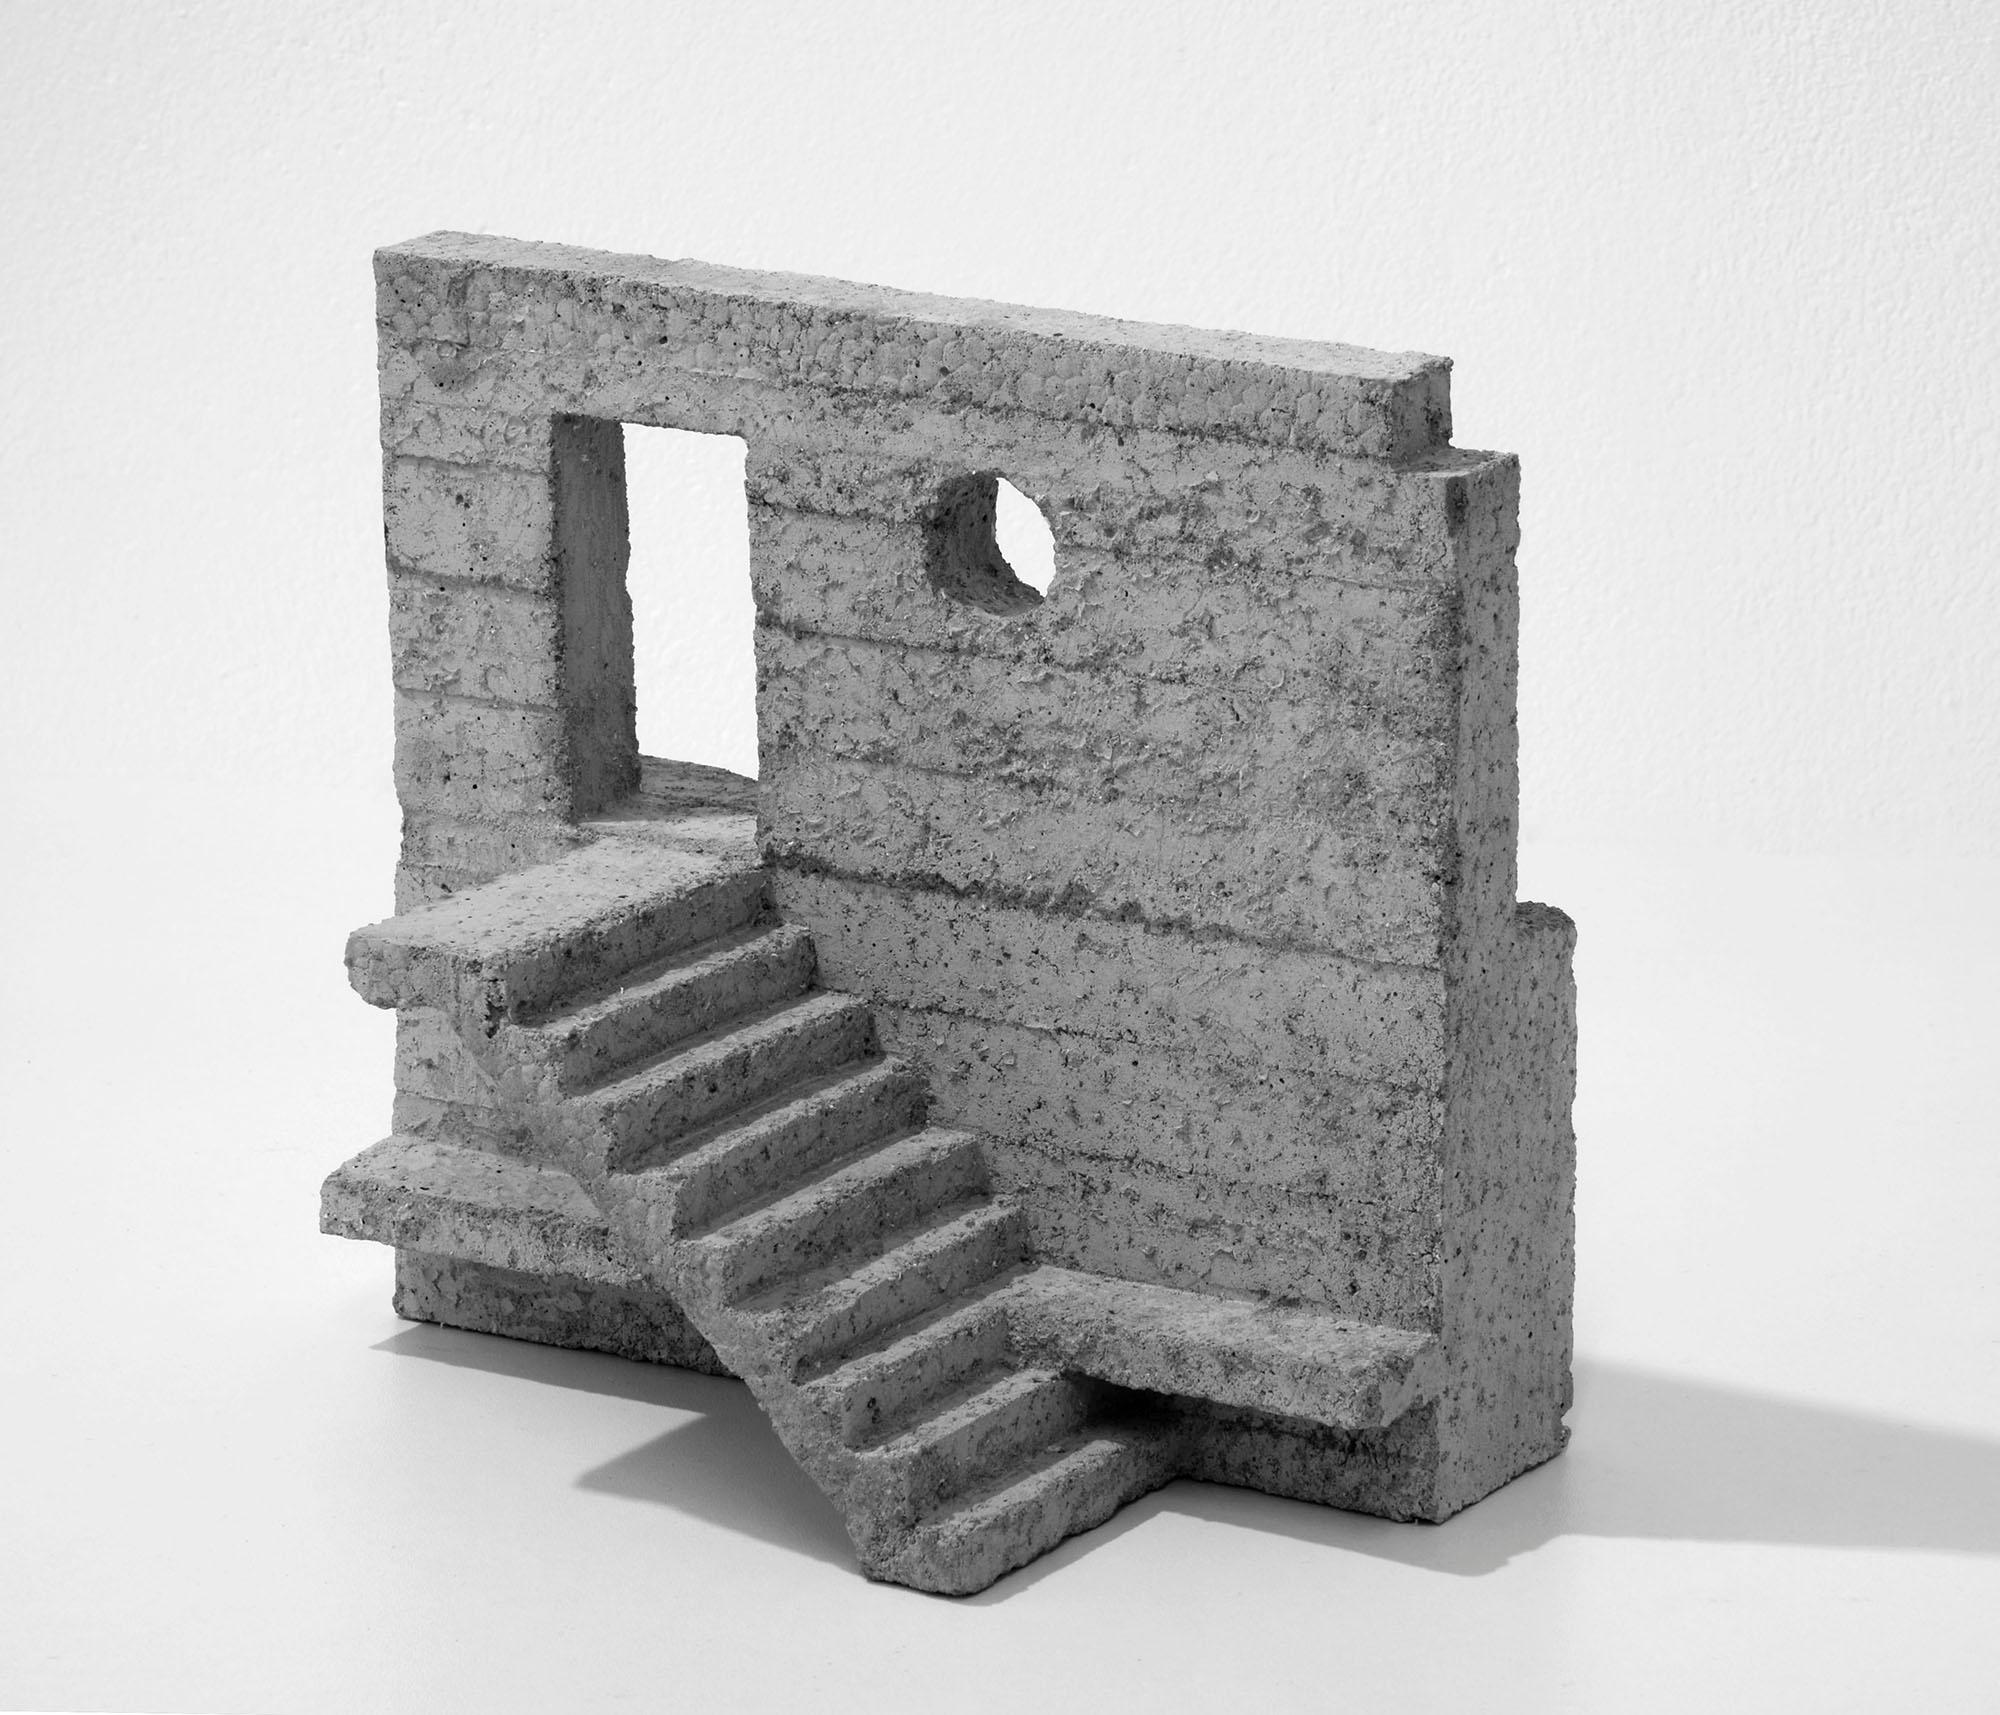 Alice & Mattia Abstract Sculpture - Minimalist Abstract Contemporary Sculpture In Concrete "Passage" 2019